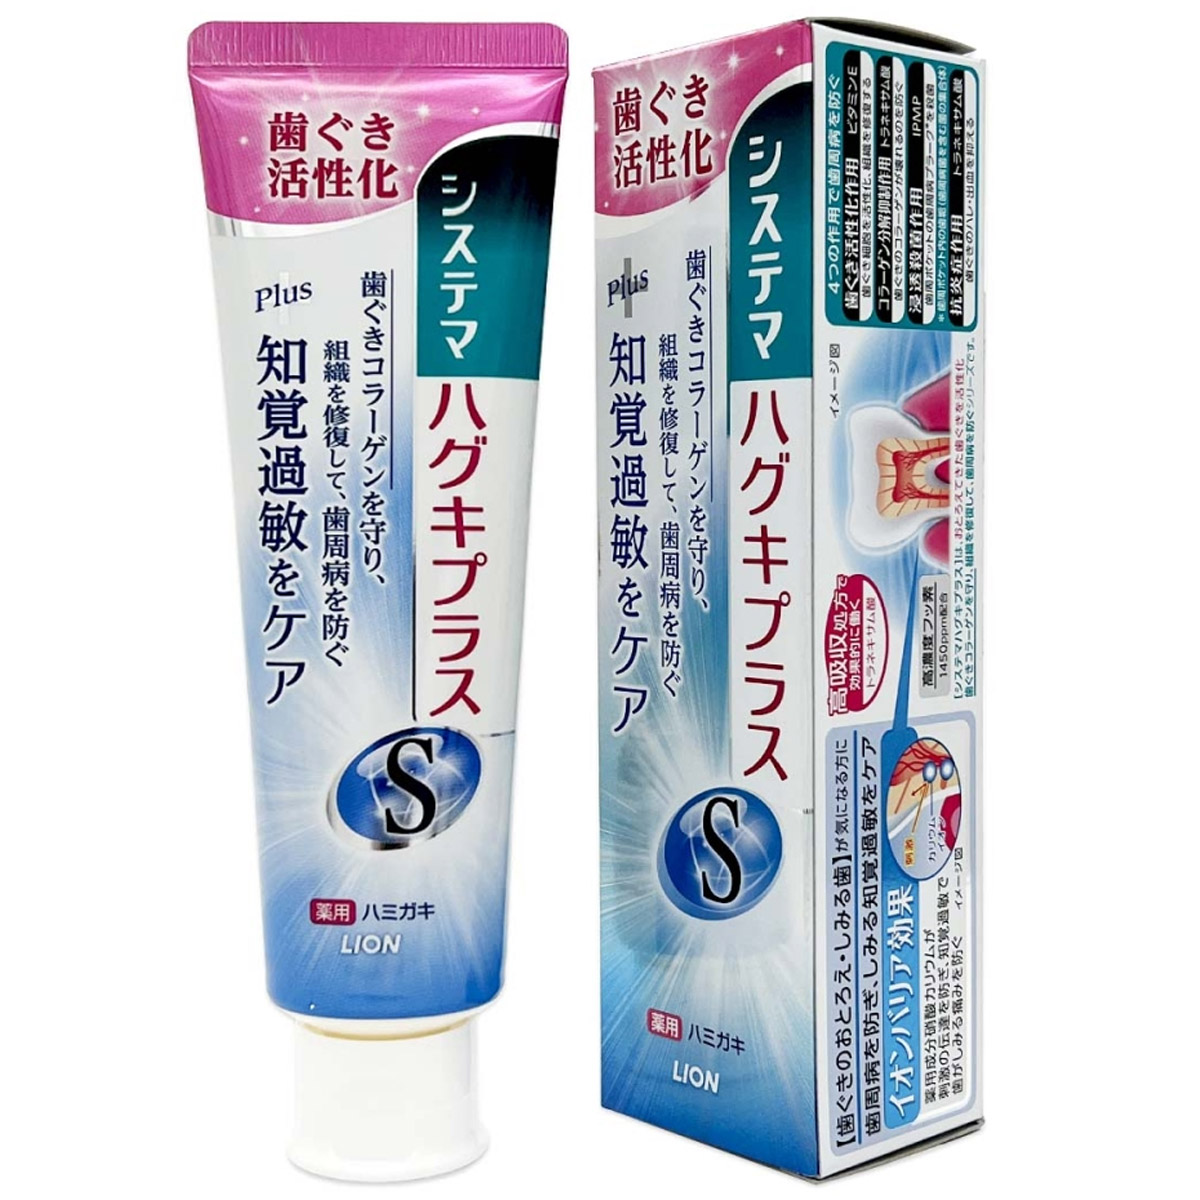 цена Зубная паста LION Systema Haguki Plus Strong